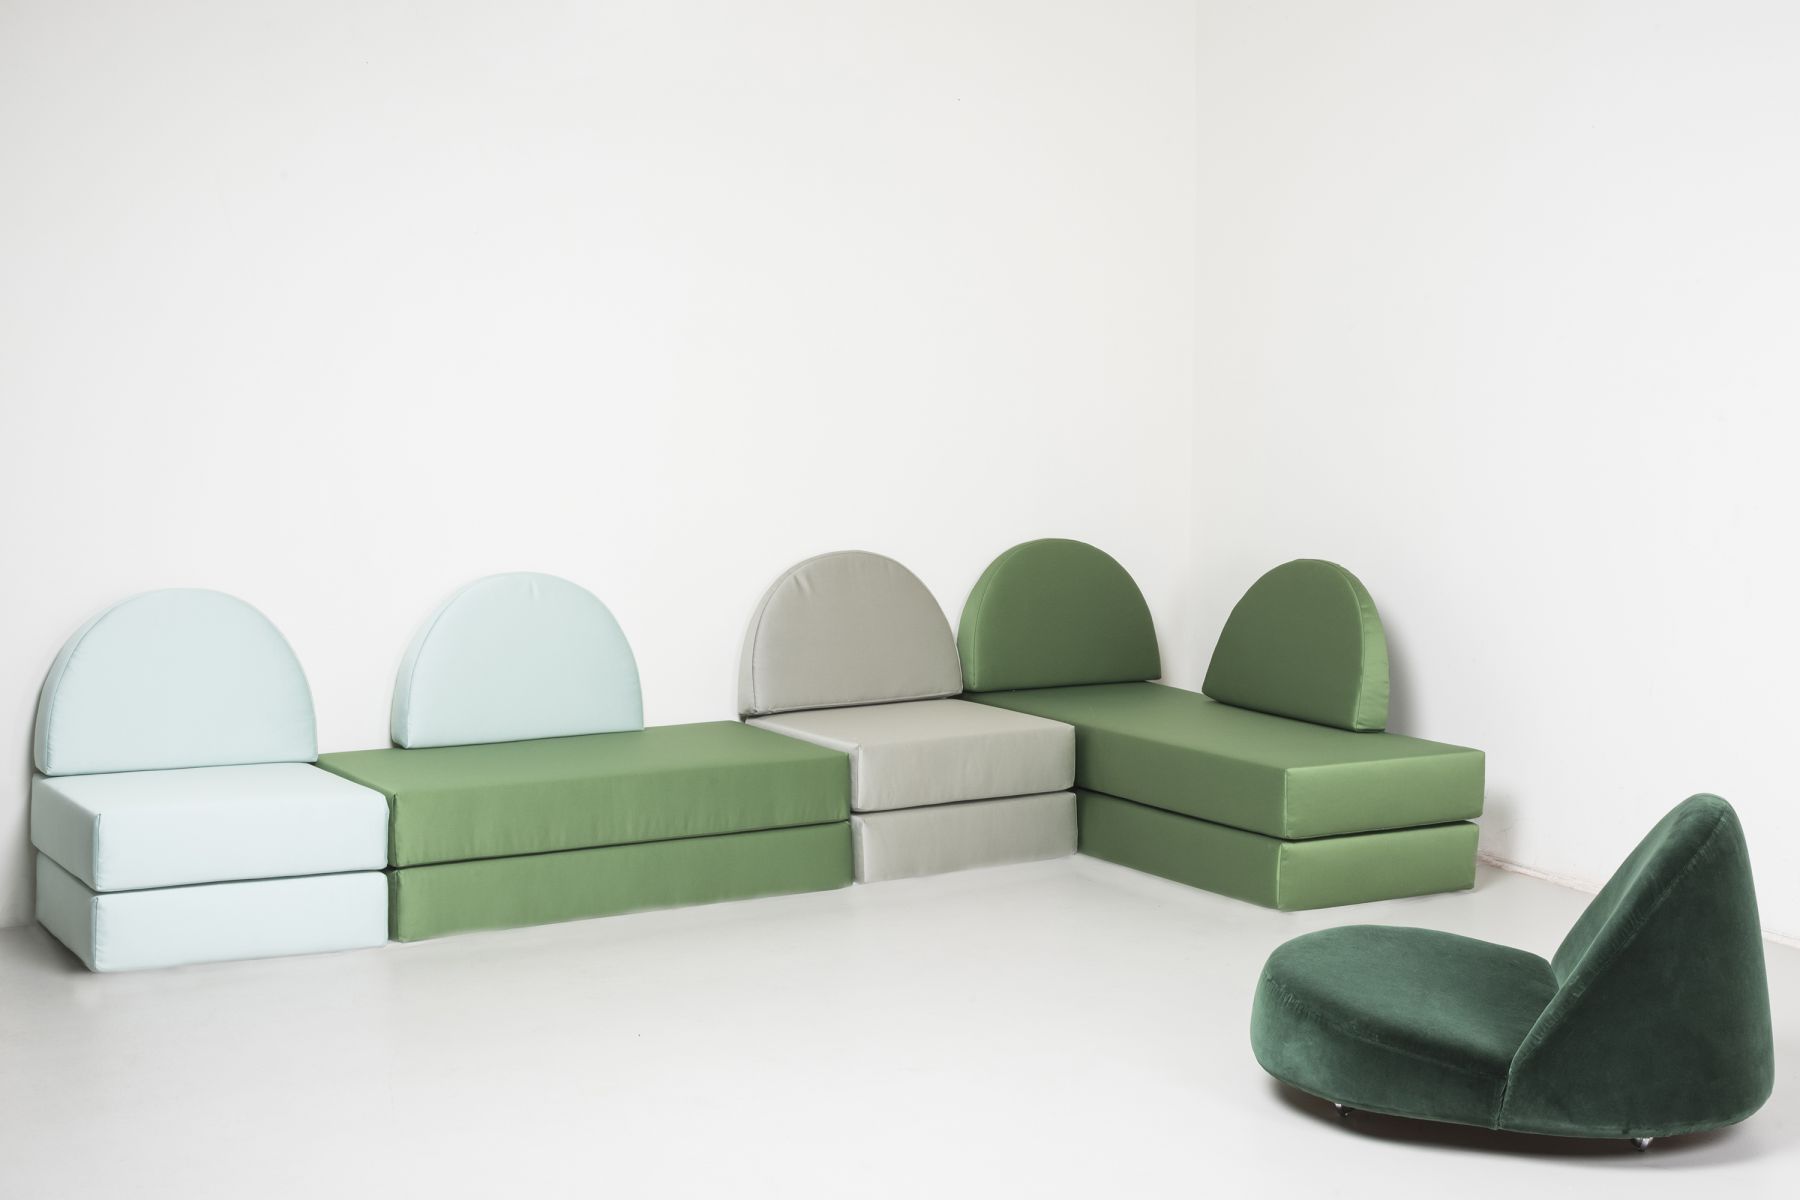 Set of seats on model by Nanna Ditzel Nanna Ditzel pic-1